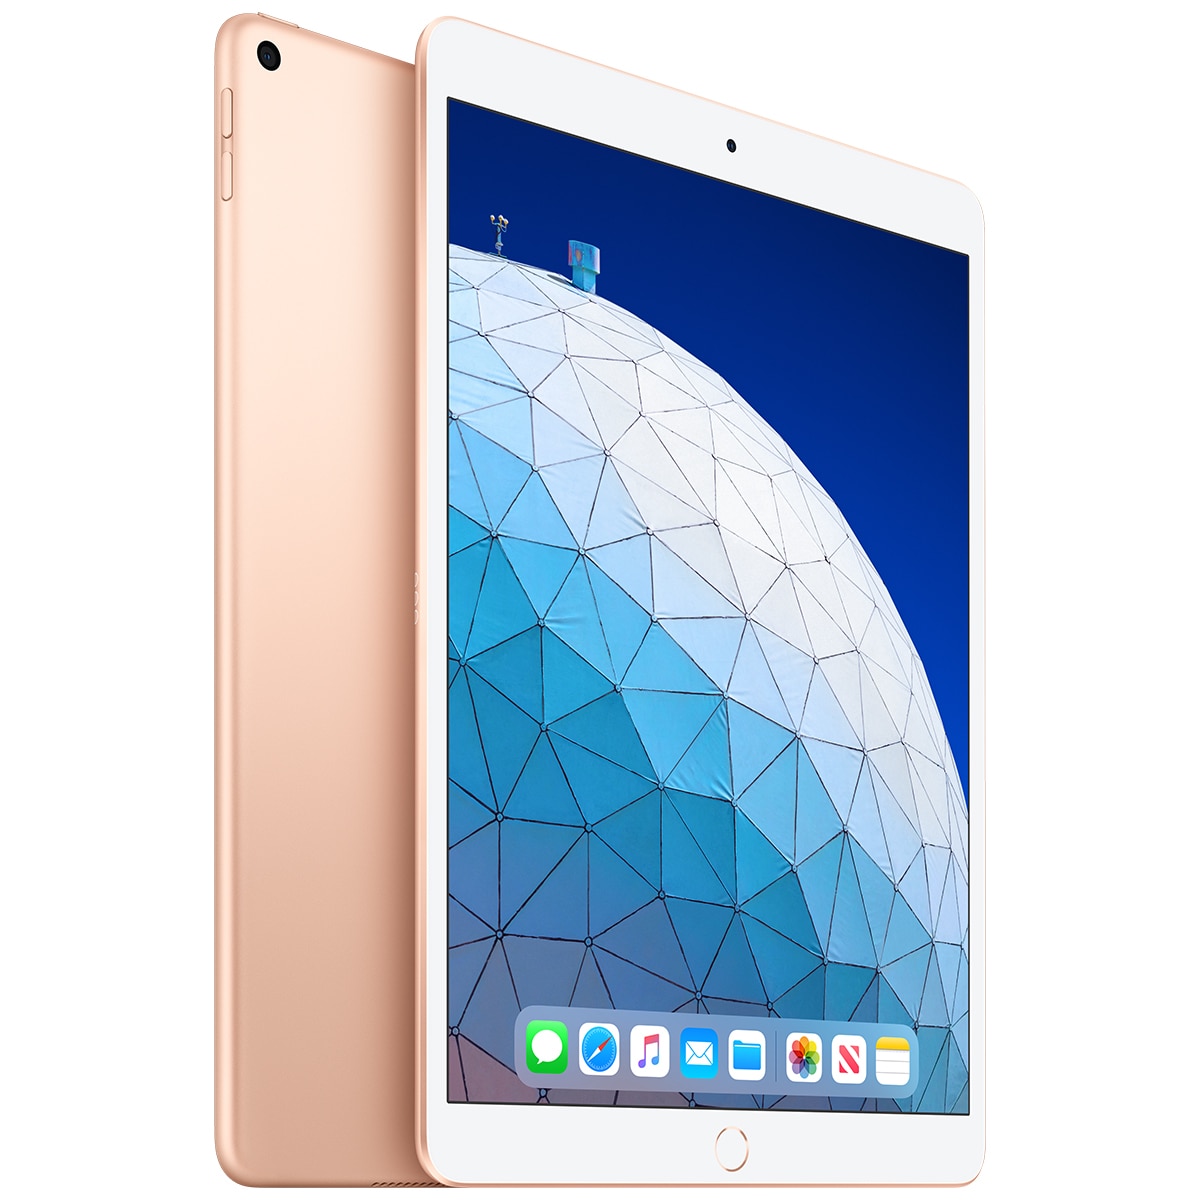 iPad Air MUUL2X/A 10.5-inch iPad Air Wi-Fi 64GB - Gold